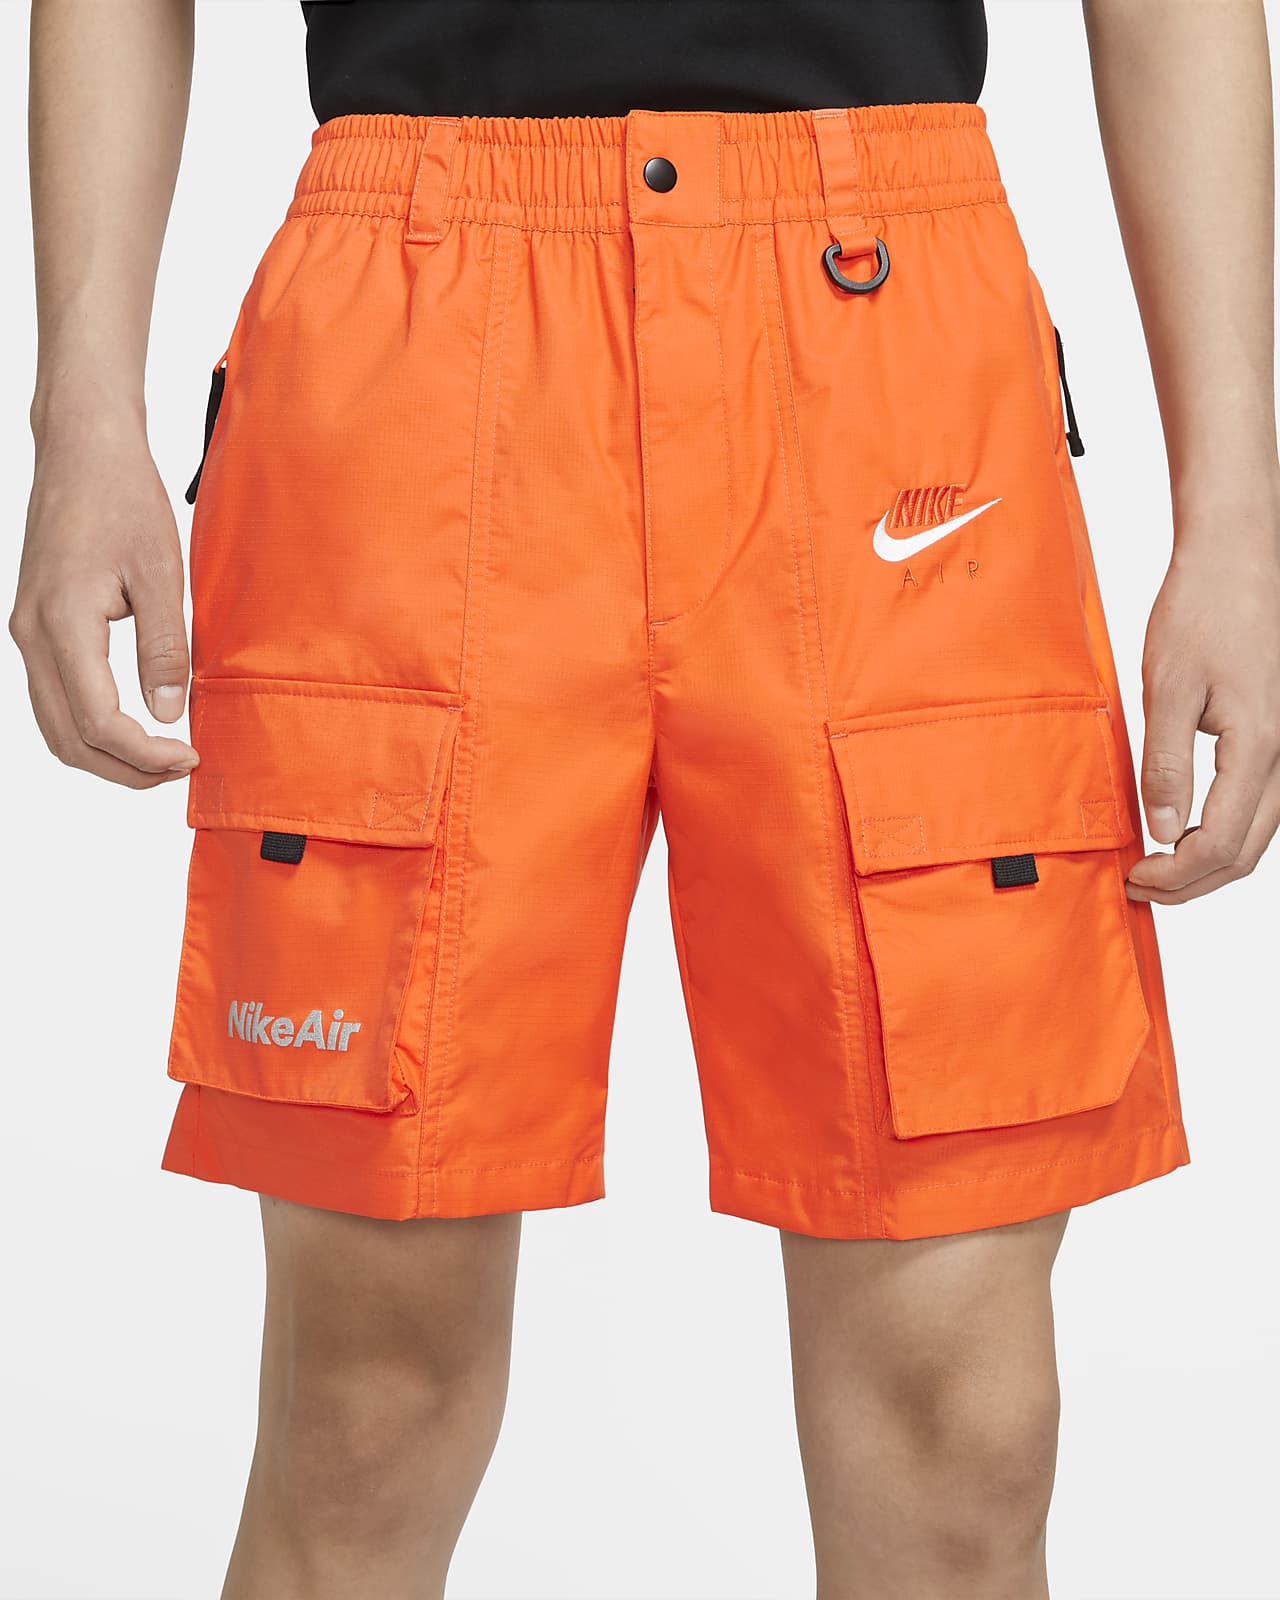 nike men's shorts zip pockets